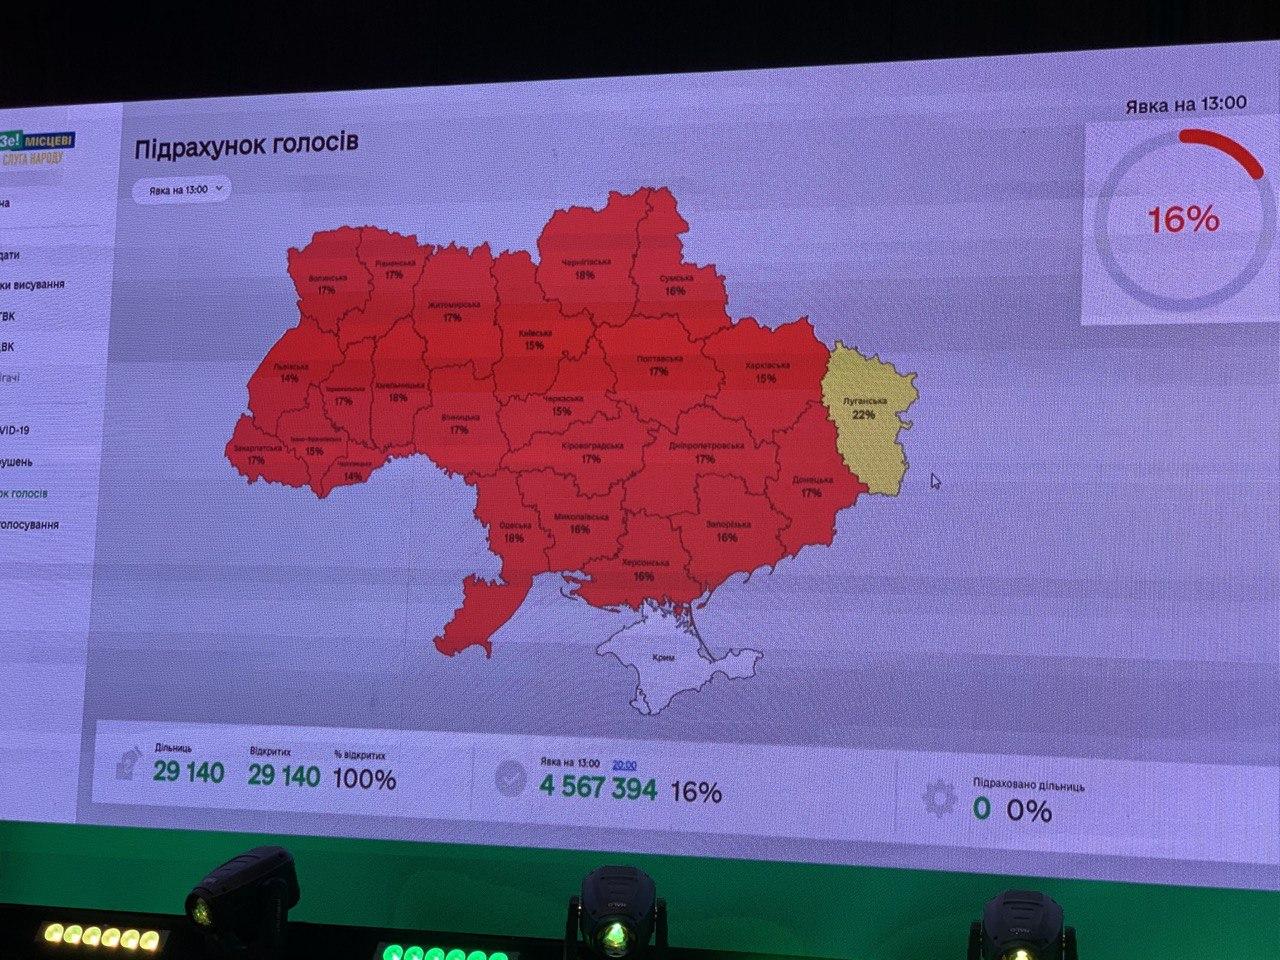 Явка по Украине, по состоянию на 13:00, составляет 16%. Фото: Страна